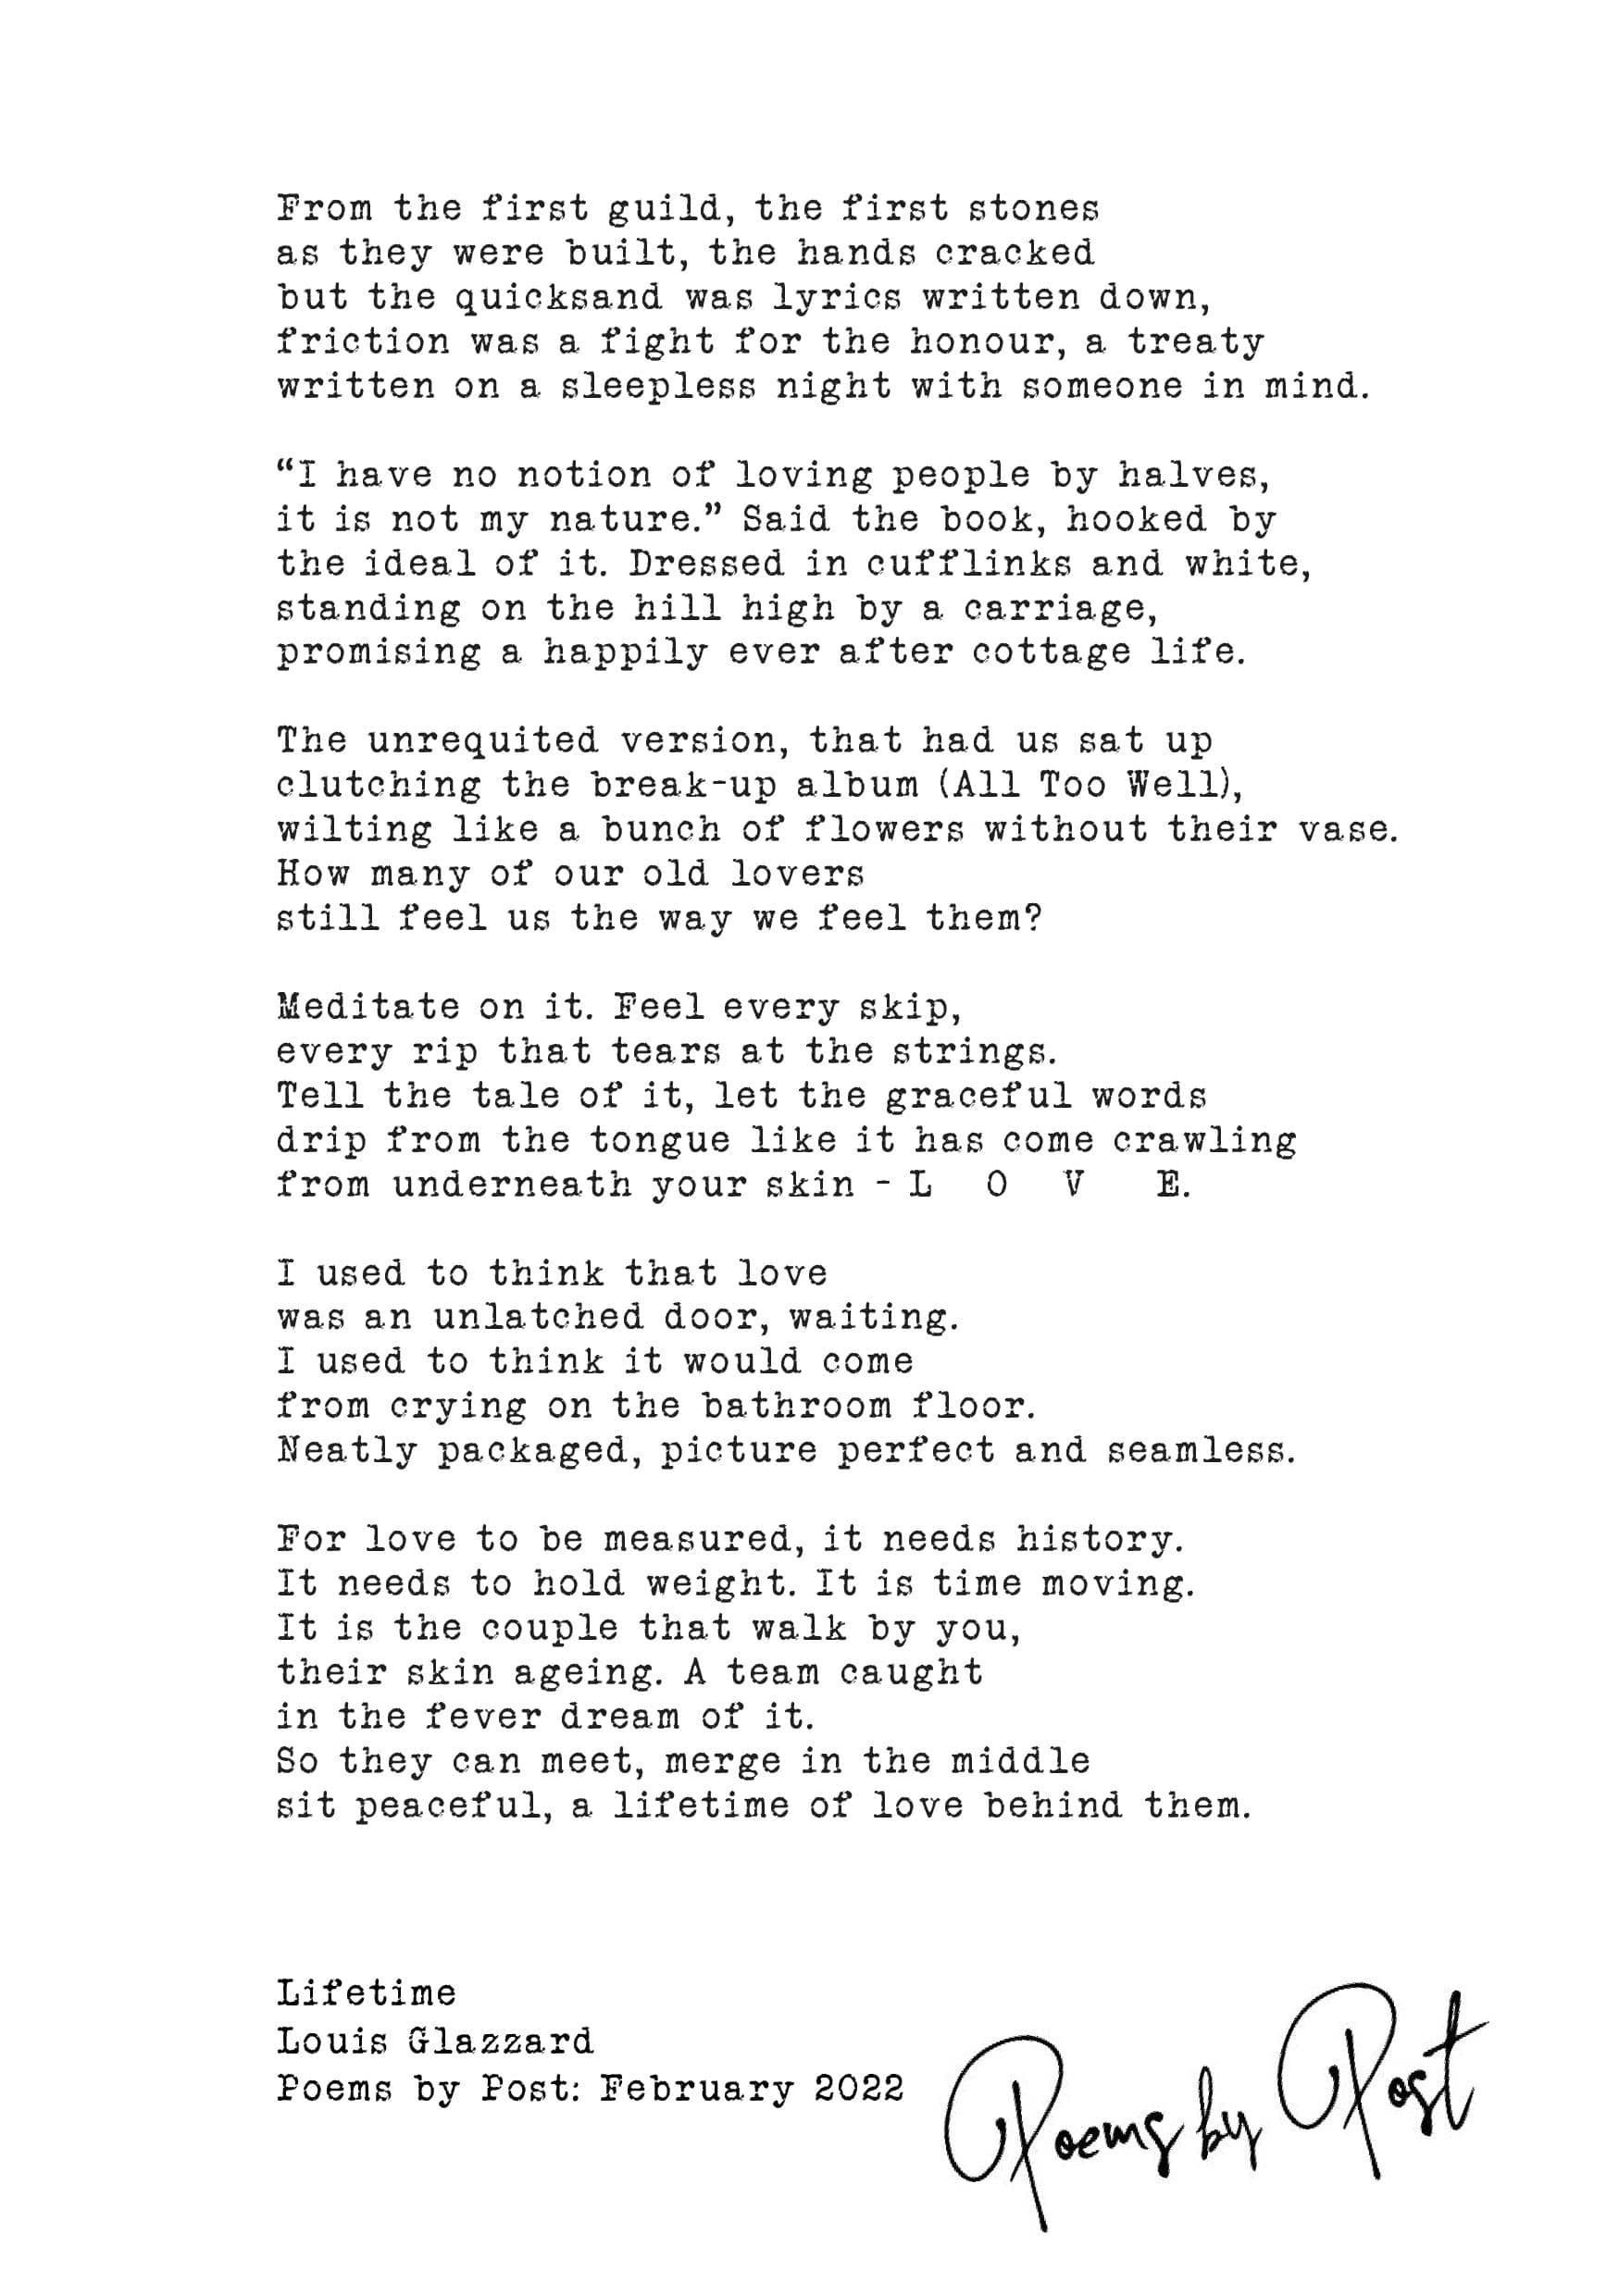 Lifetime poem